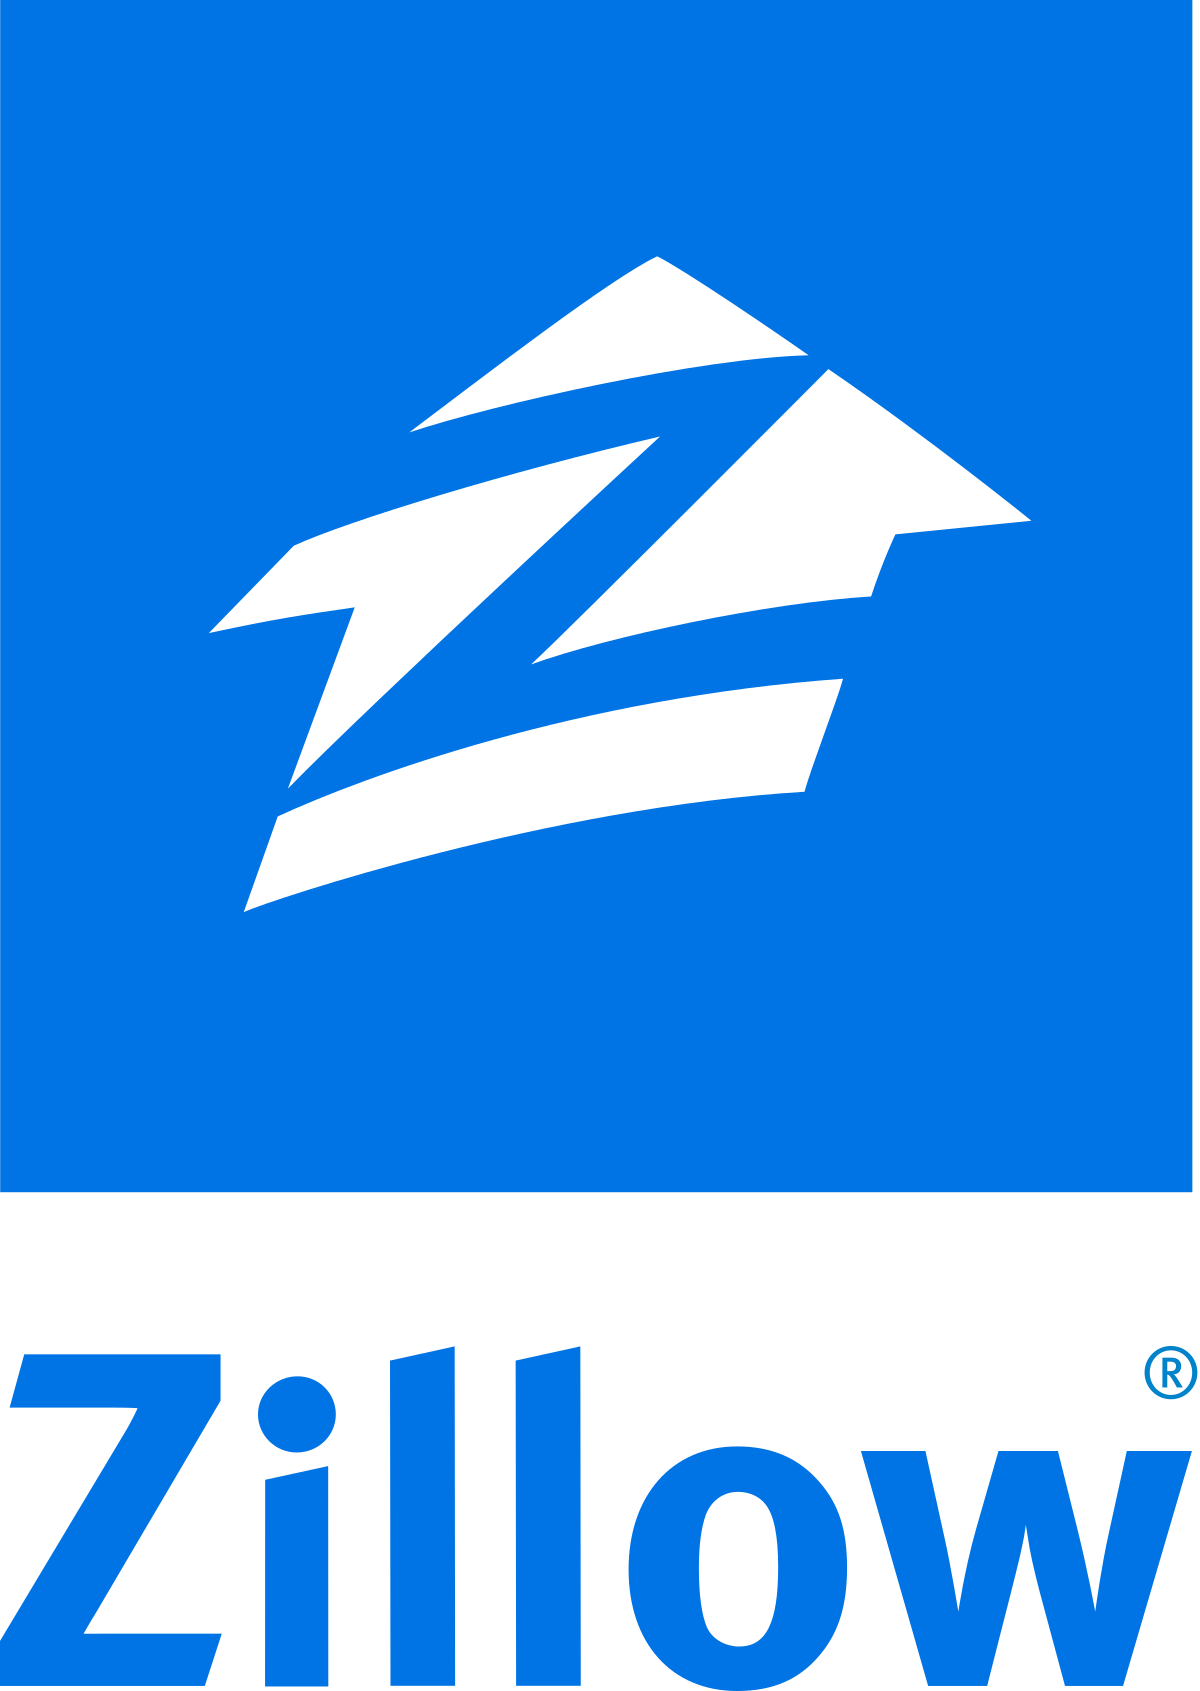 Zillow (zillow.com) - Logos Download